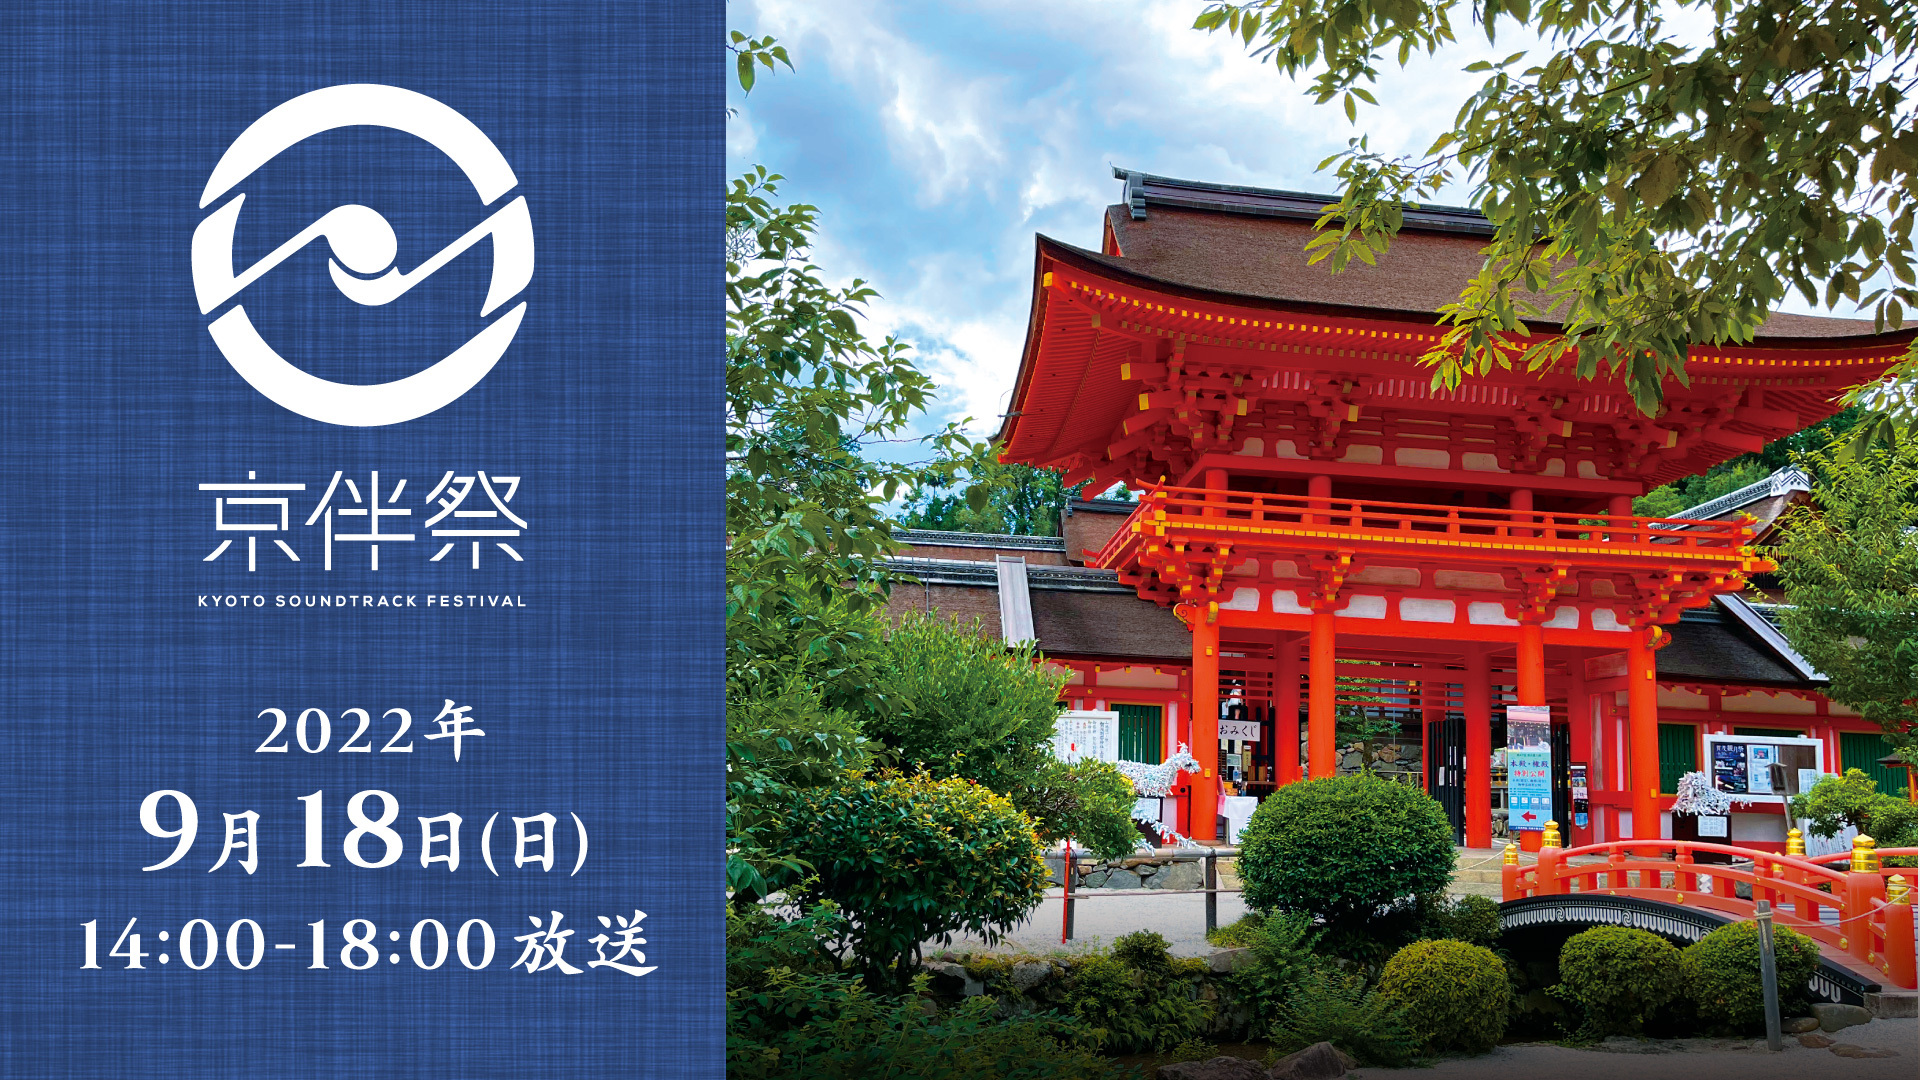 Free live streaming of soundtrack festival "KYOBANSAI" at Kamigamo Shrine in Kyoto!